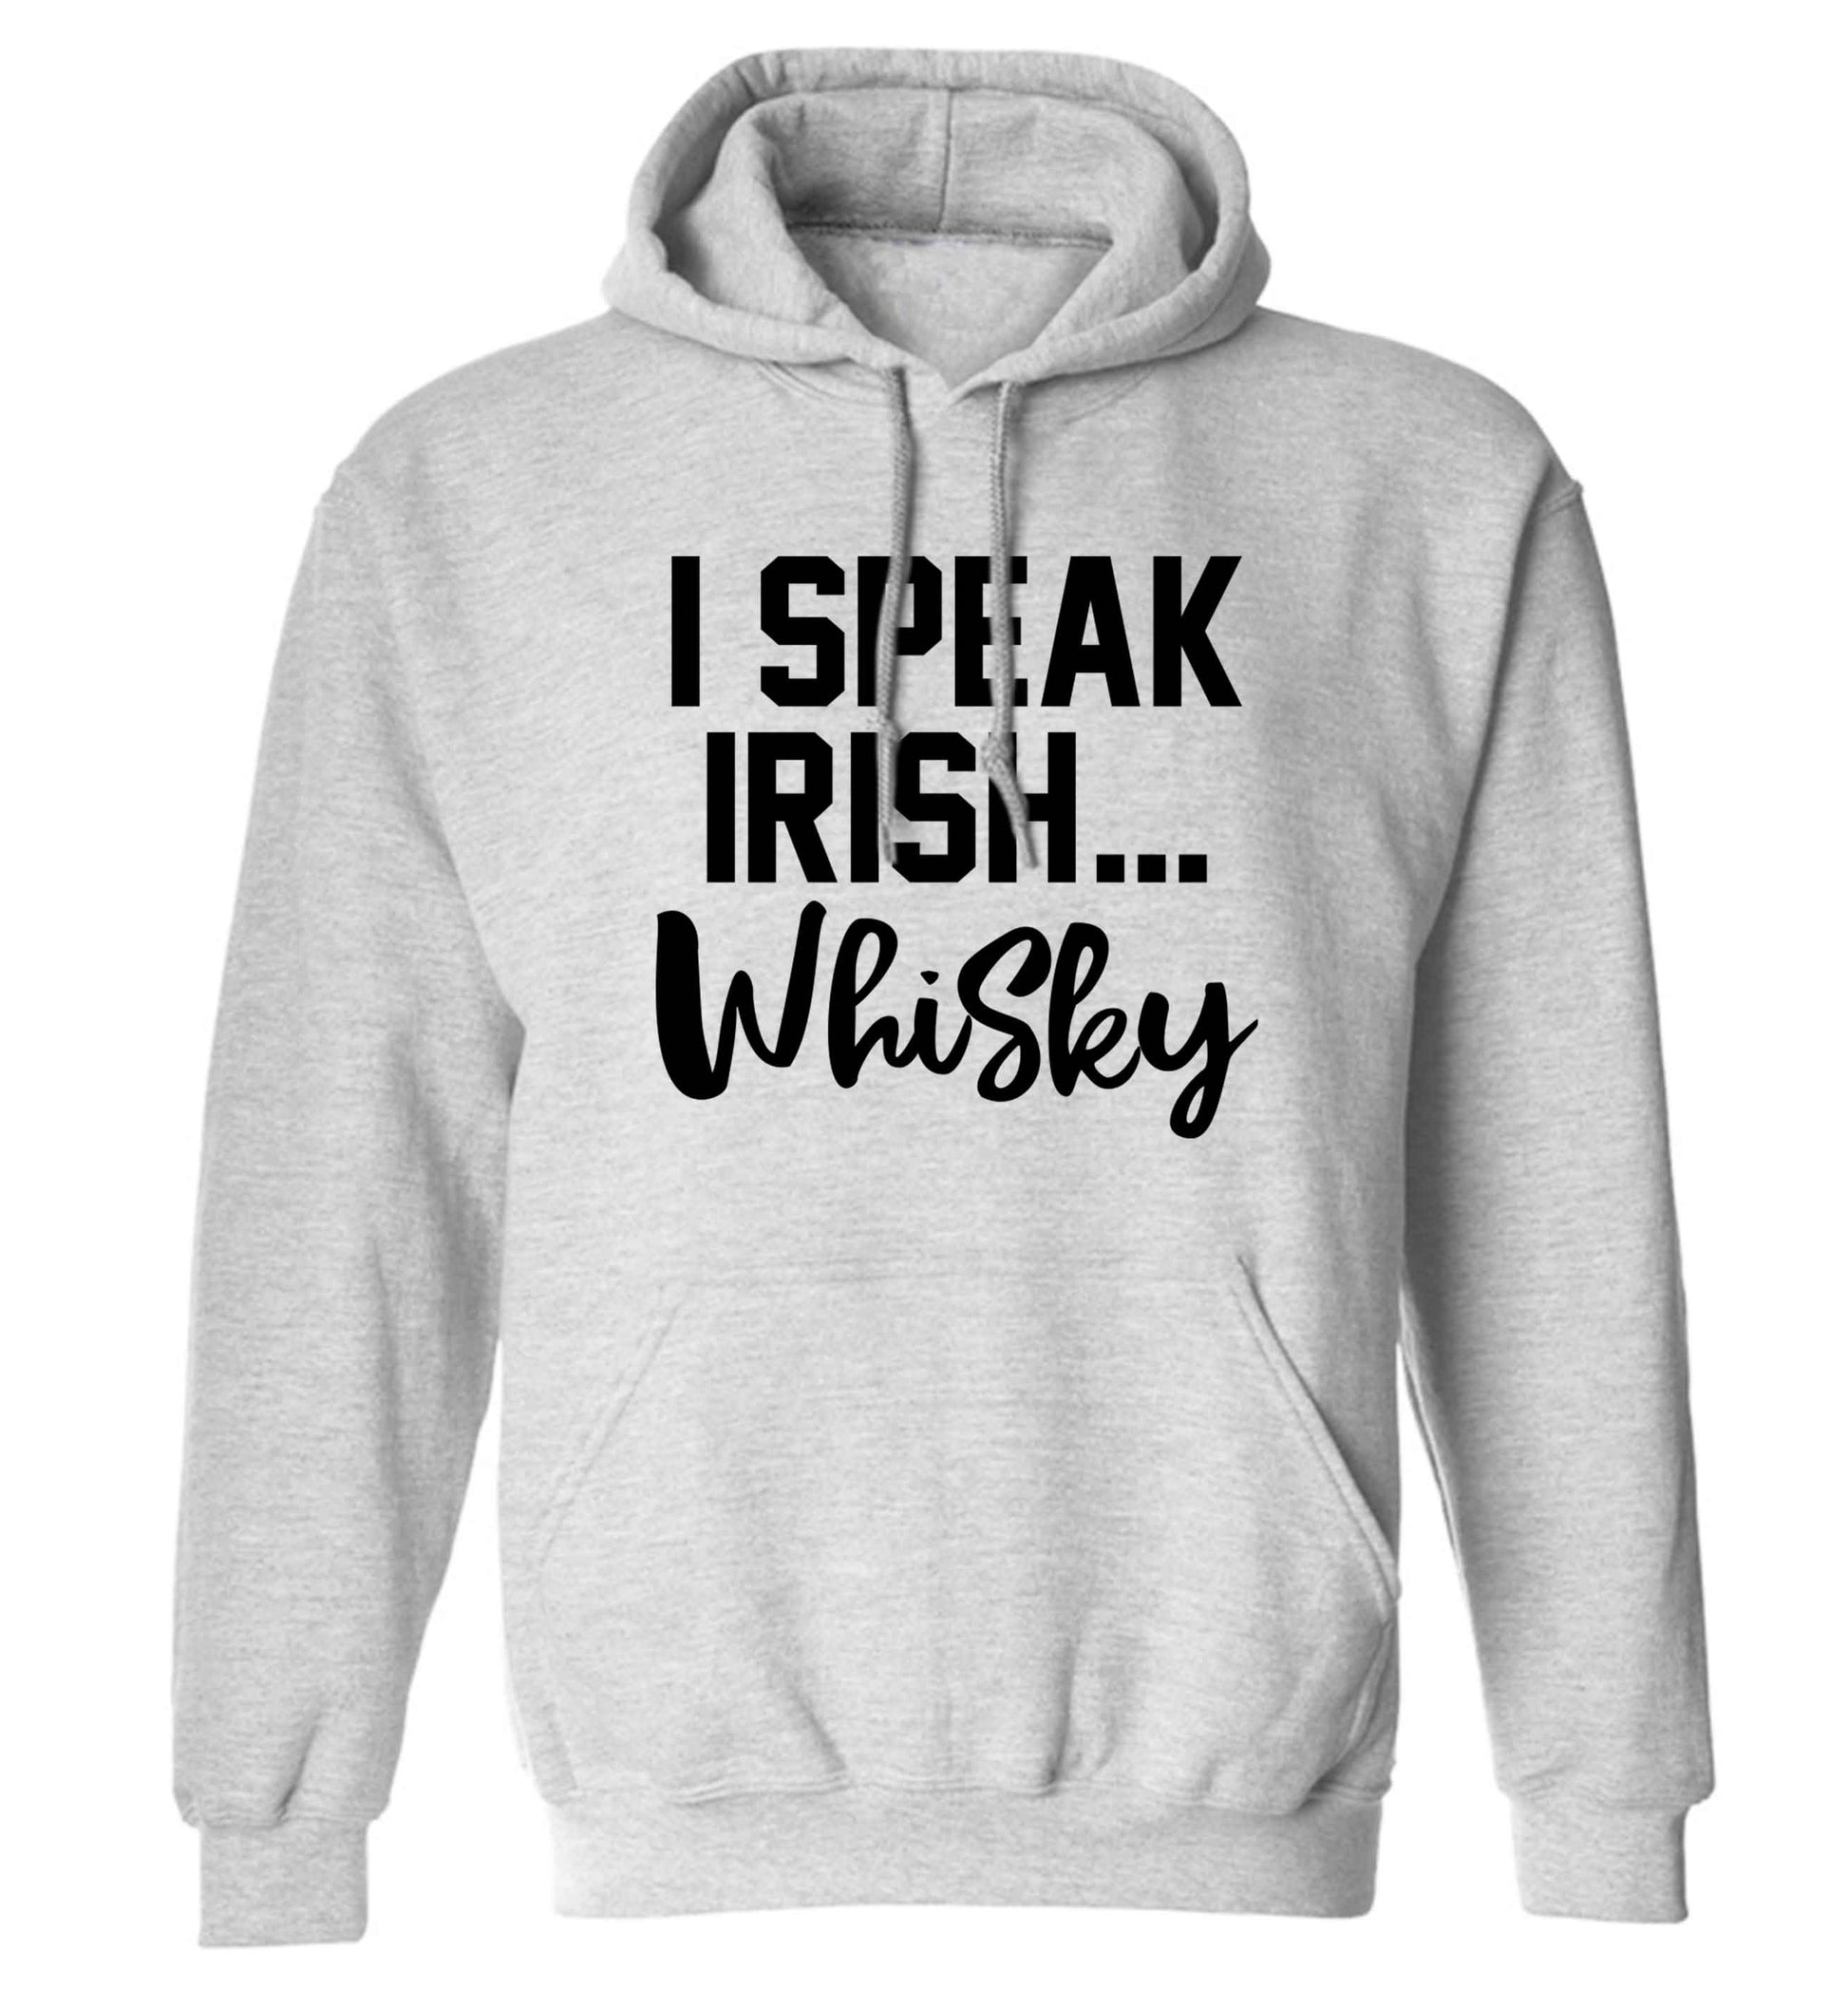 I speak Irish whisky adults unisex grey hoodie 2XL